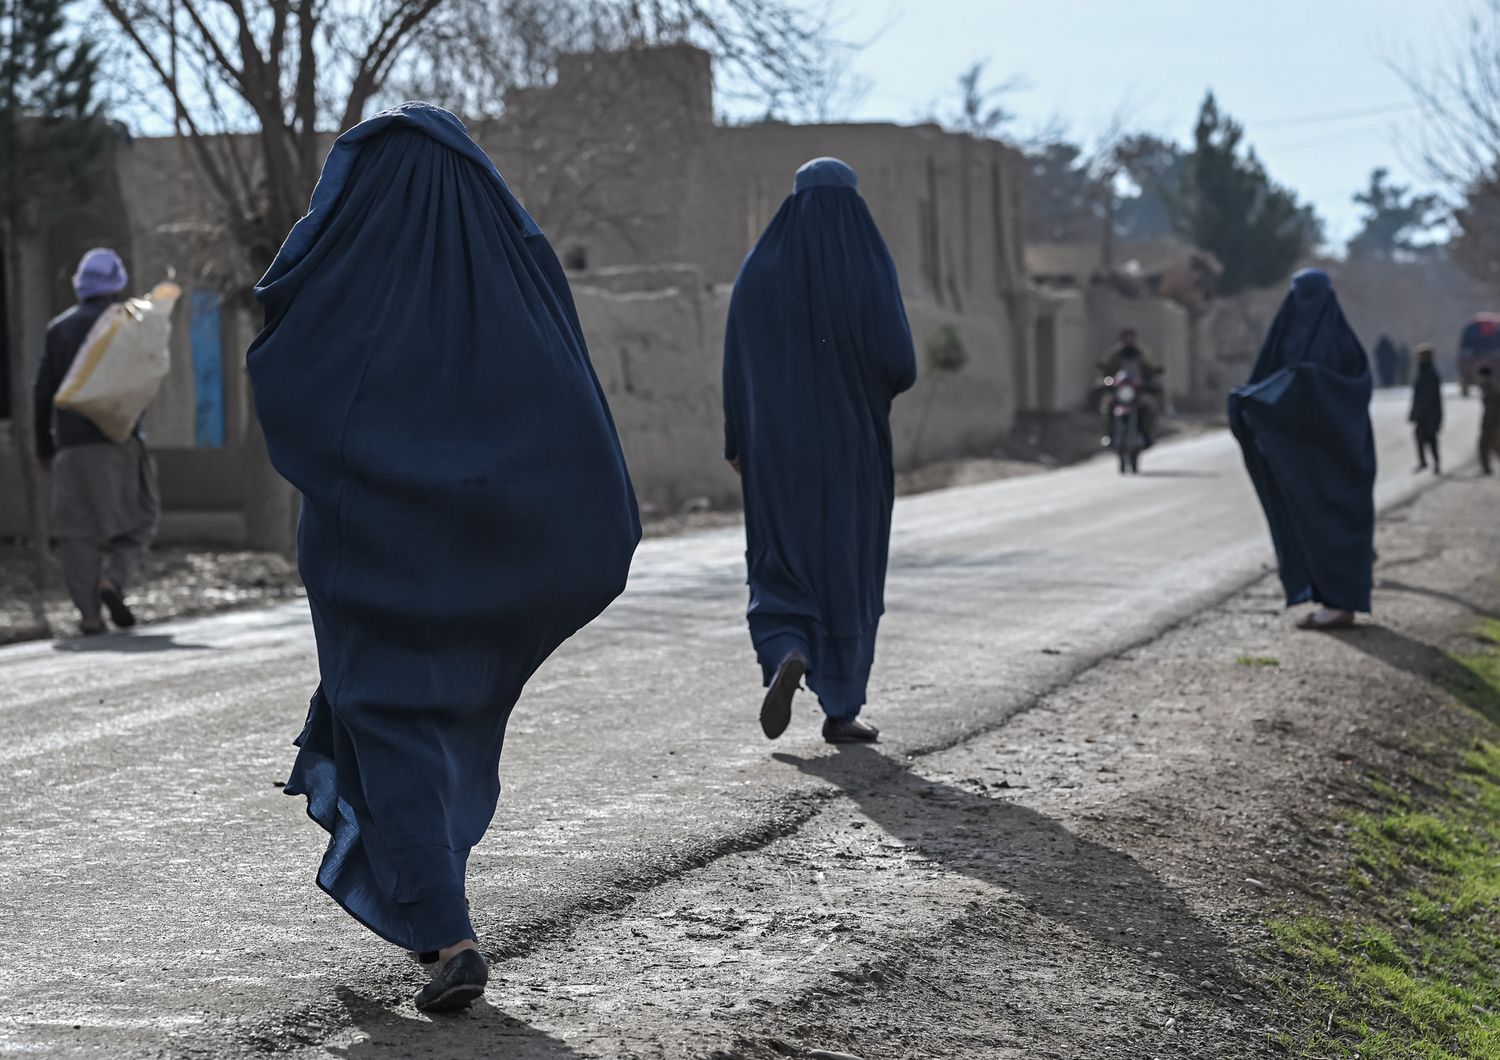 Donne con il burqa in Afghanistan